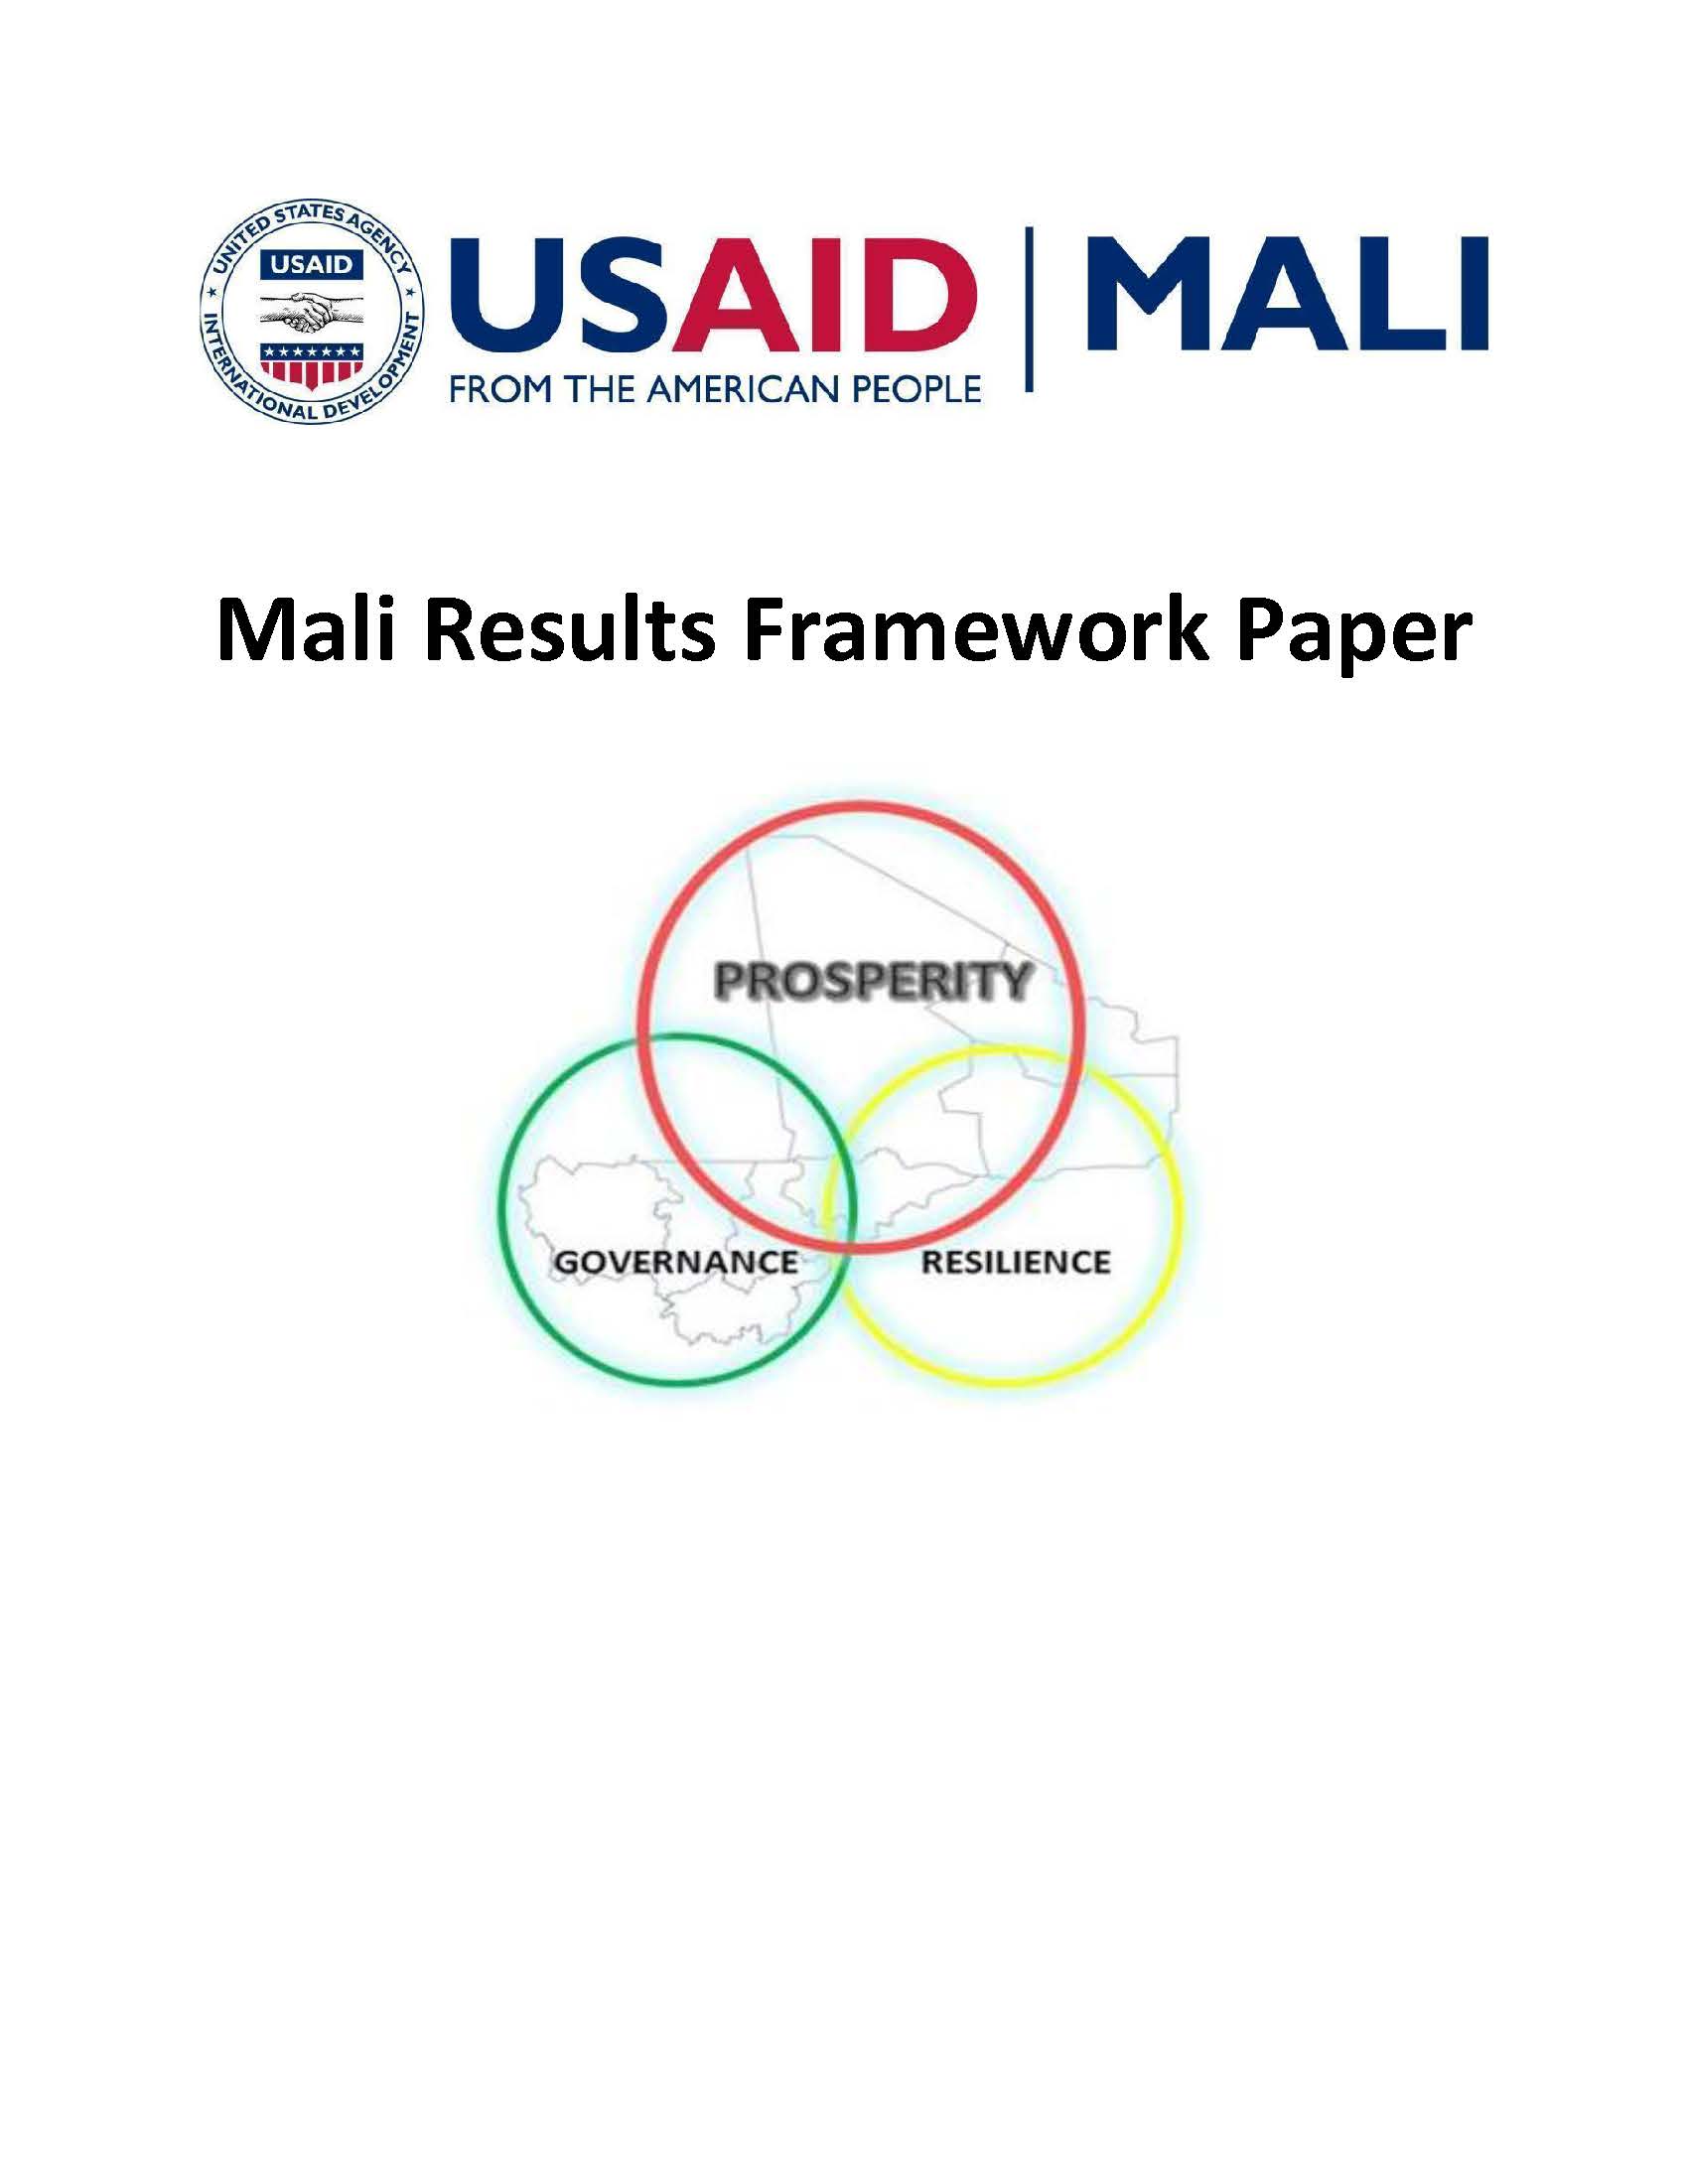 USAID/Mali Results Framework Paper 2015-2019